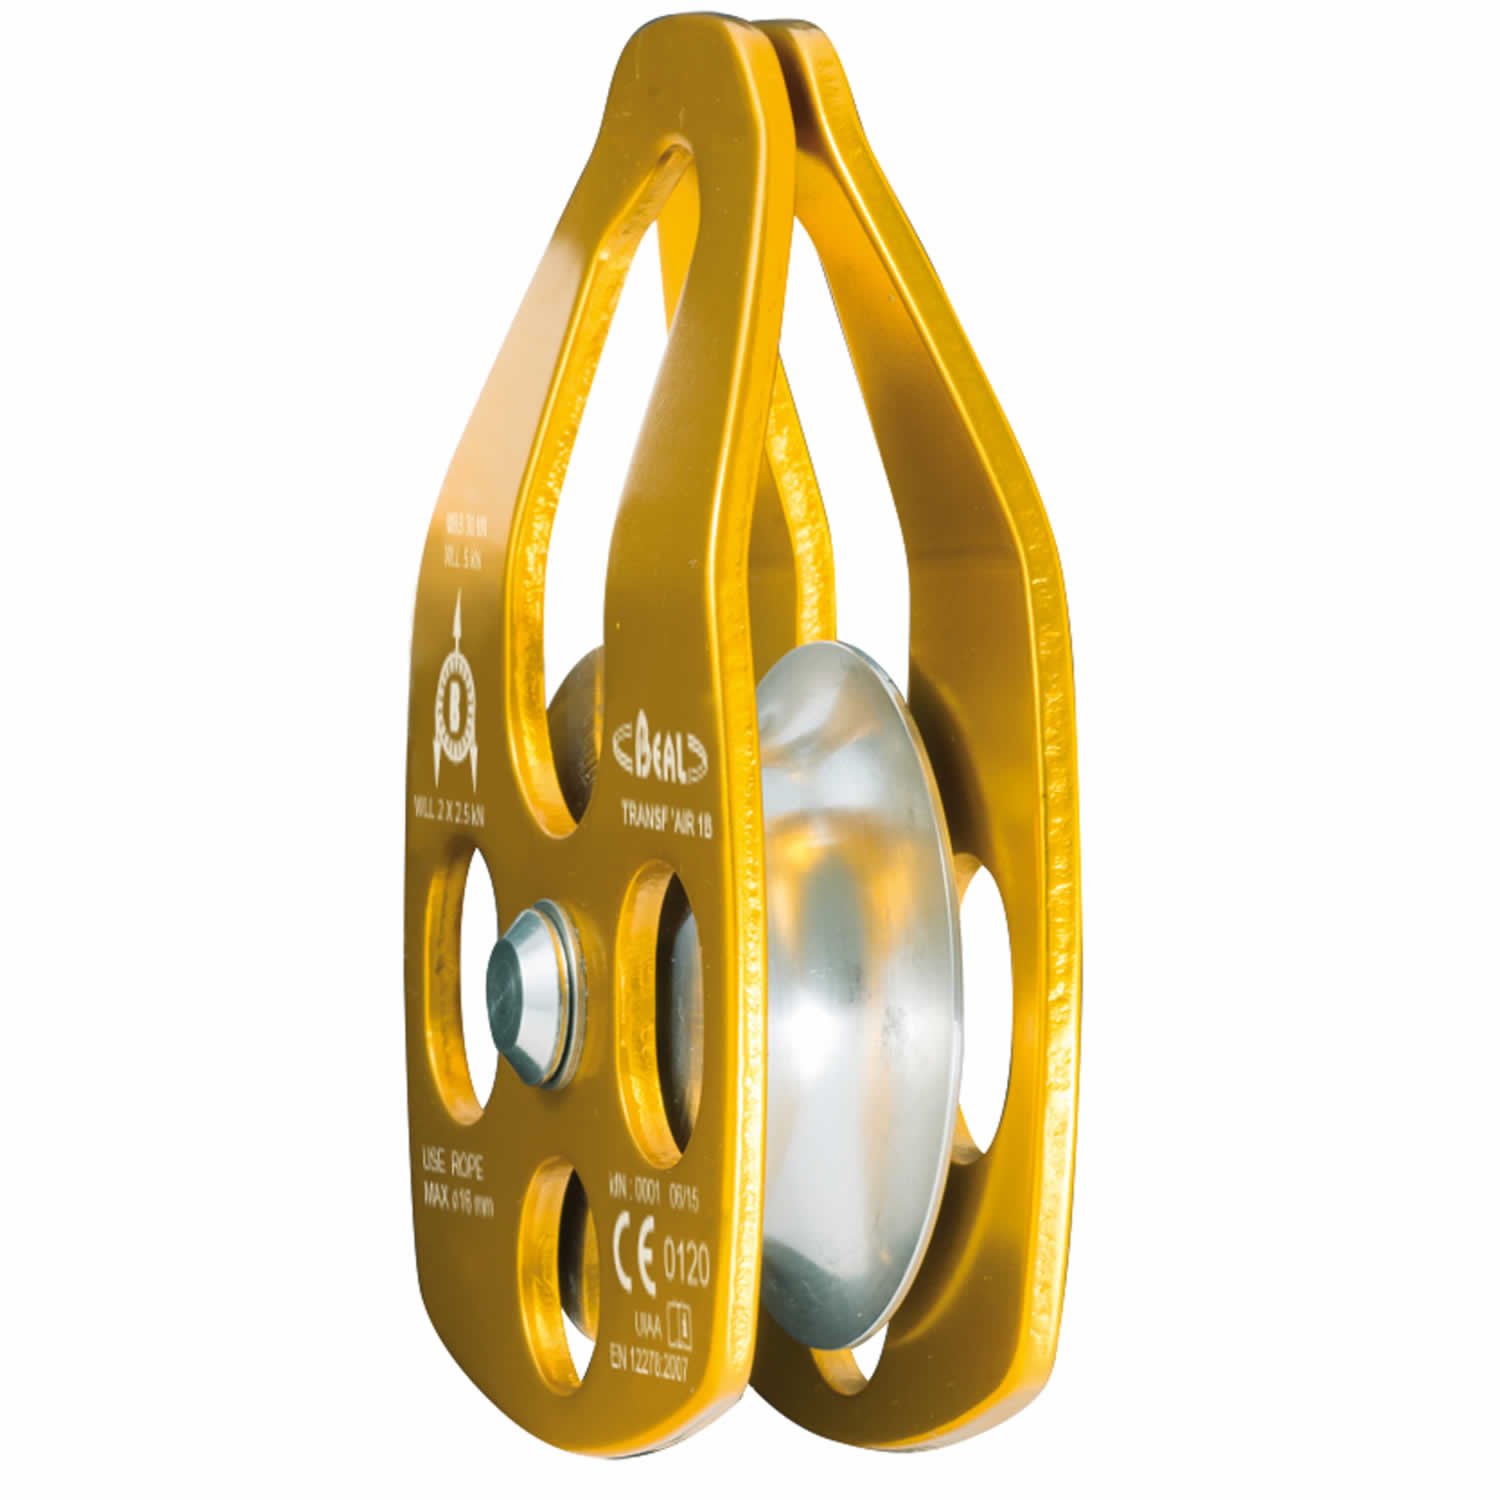 Beal Transf' Air 1b Gelb-Grau - Leichte große Einfach-Seilrolle, Größe One Size - Farbe Gold - Grey